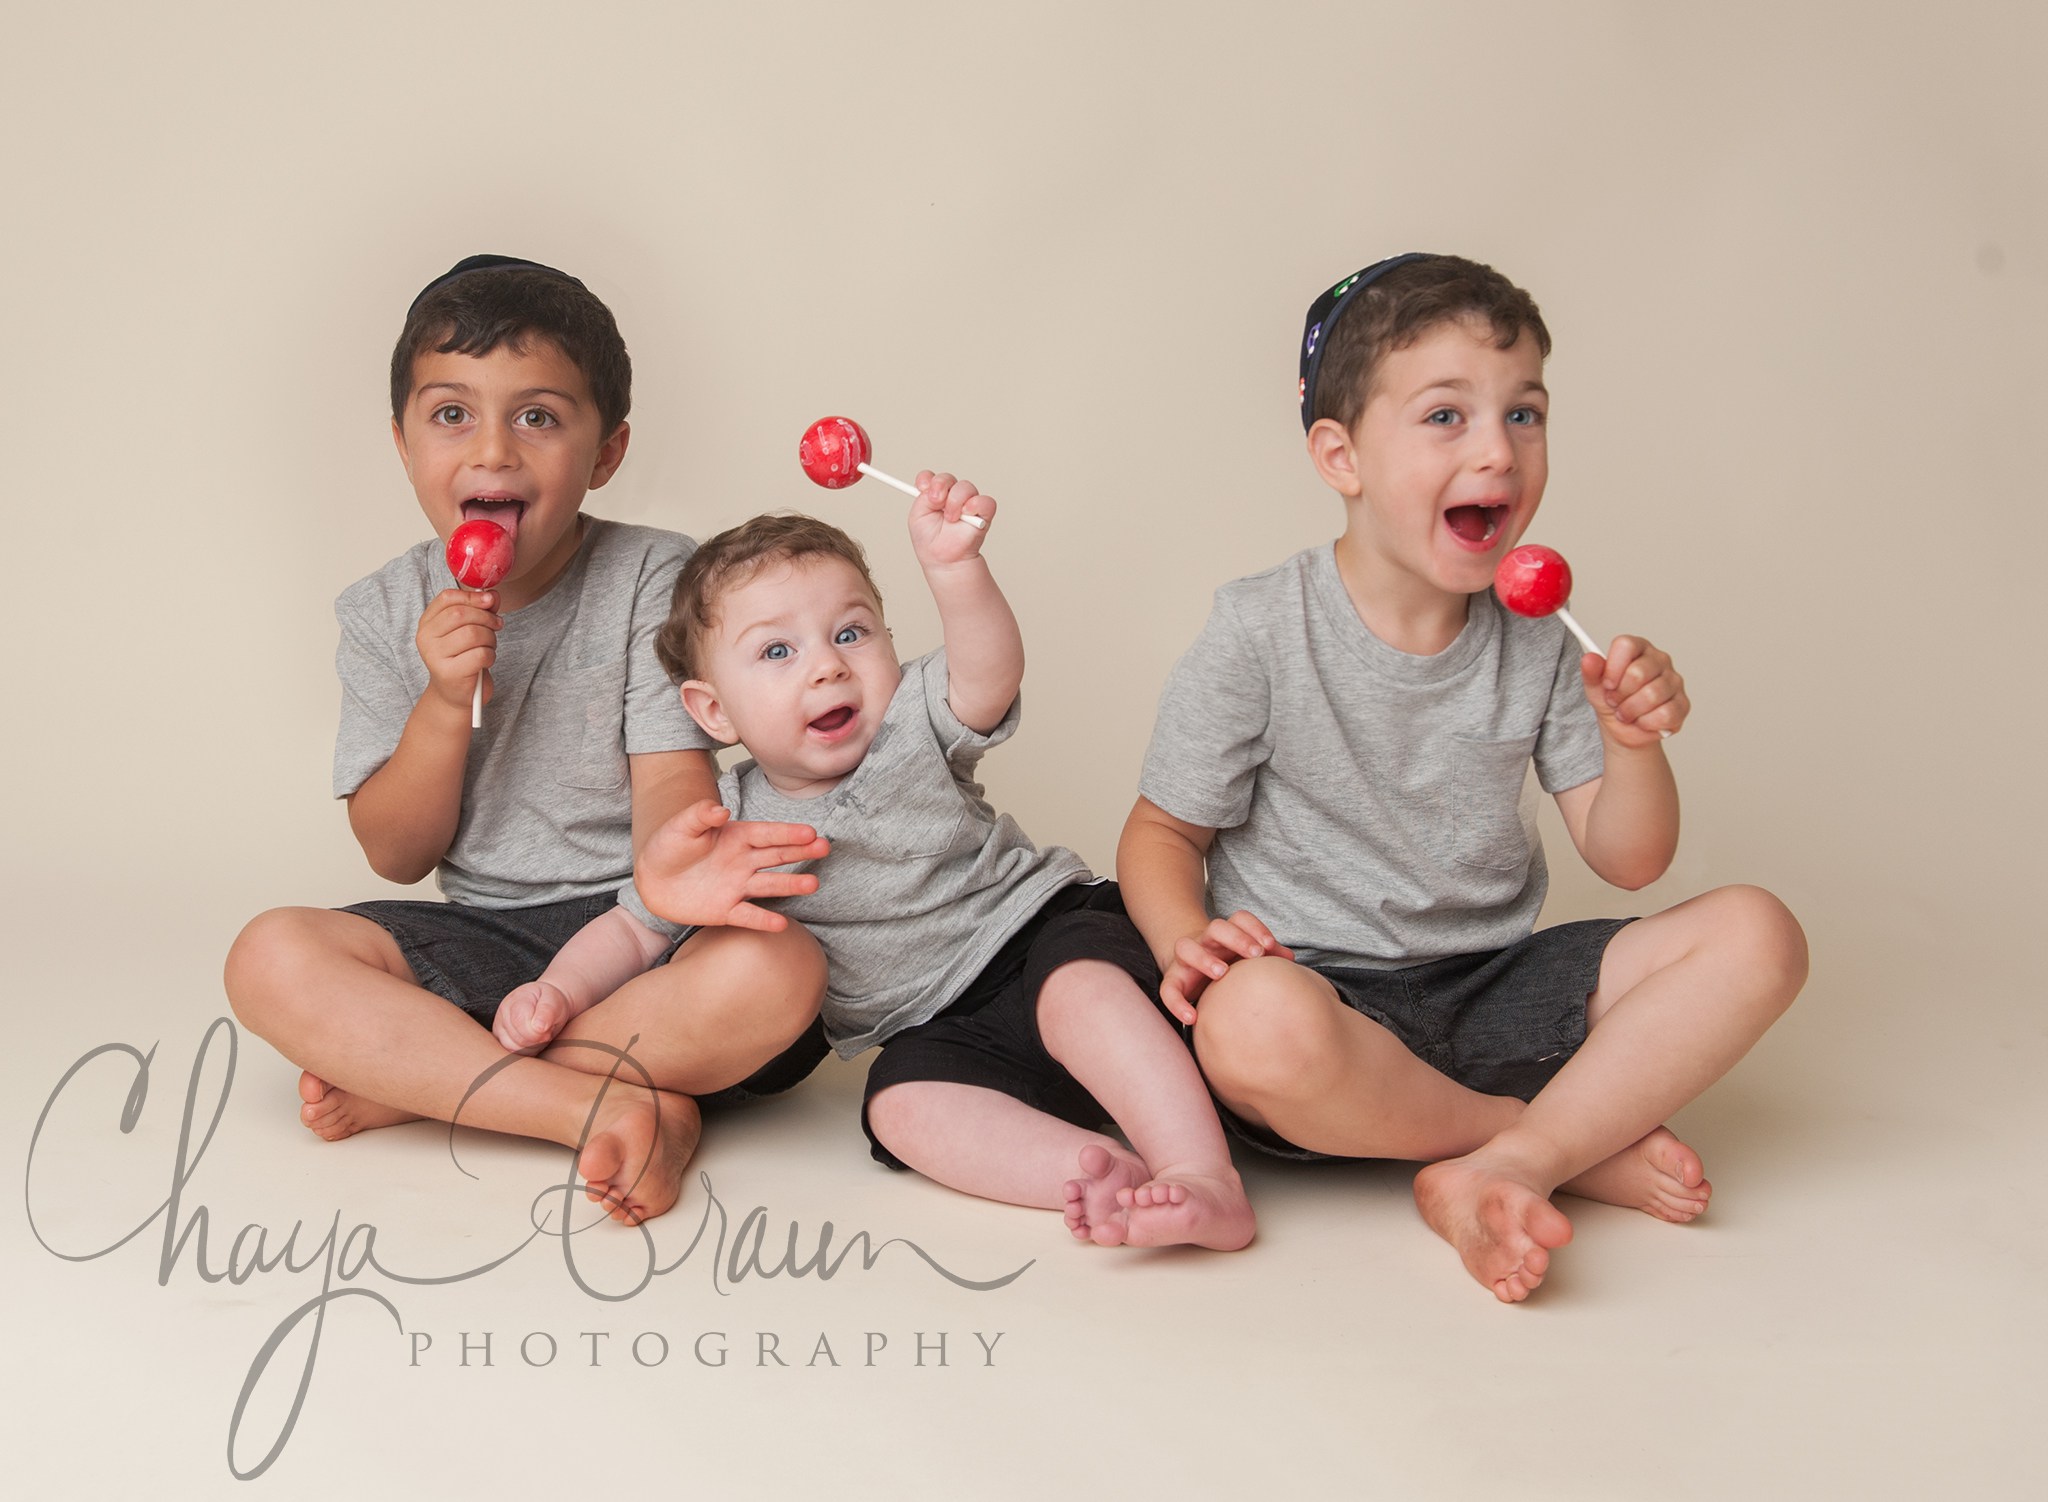 Family Photo Session - 3 Brothers | Chaya Braun Photography